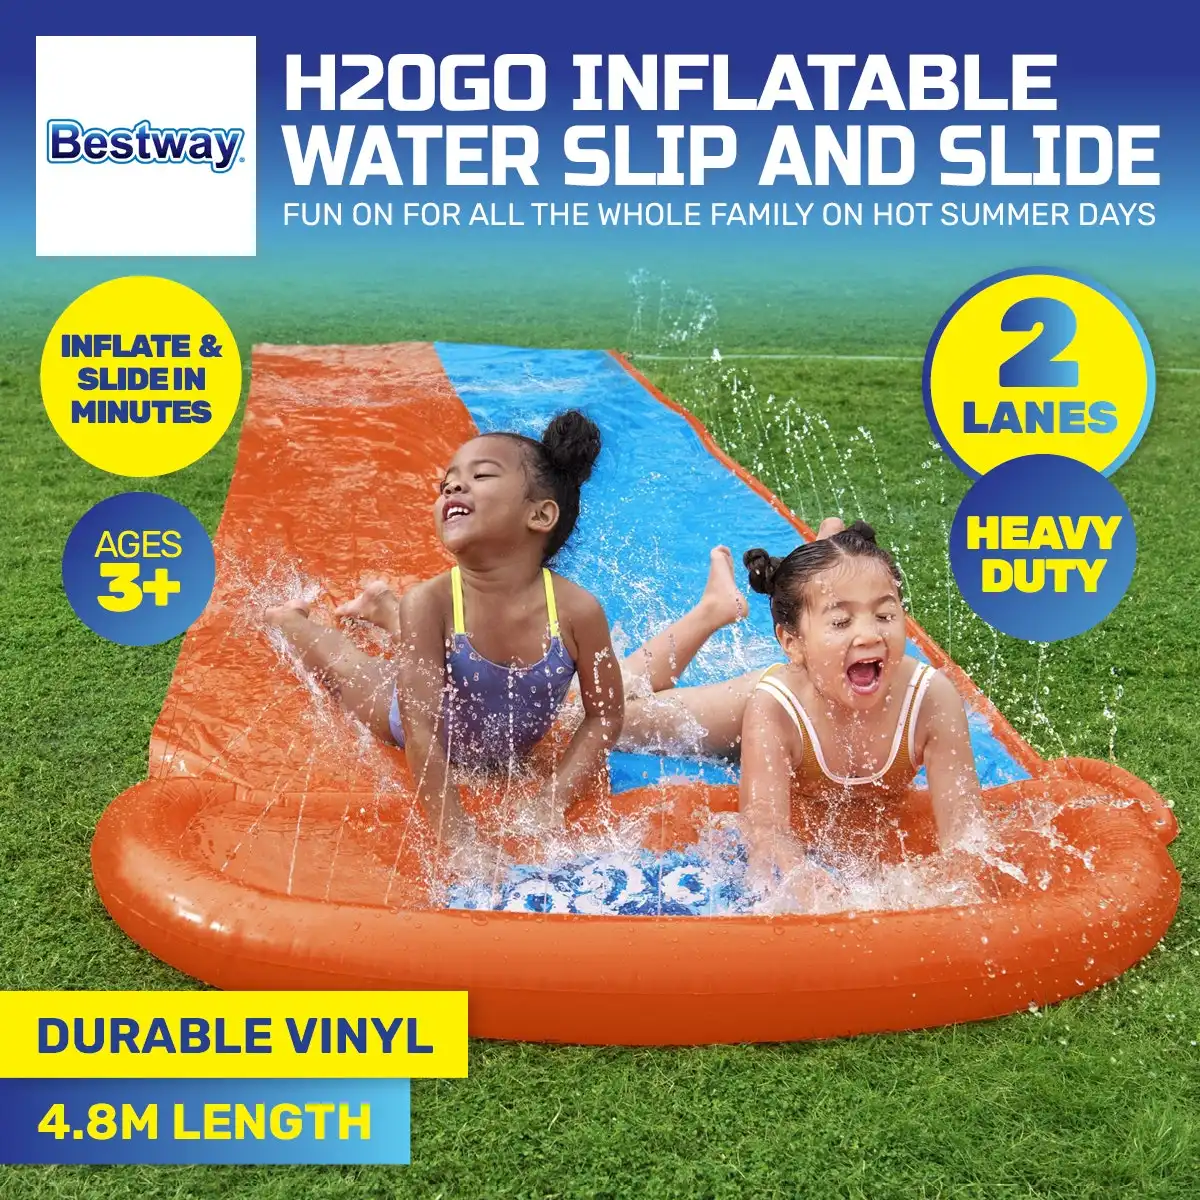 Bestway® 4.8m Double Lane Inflatable Water Slide Built-In Water Jets